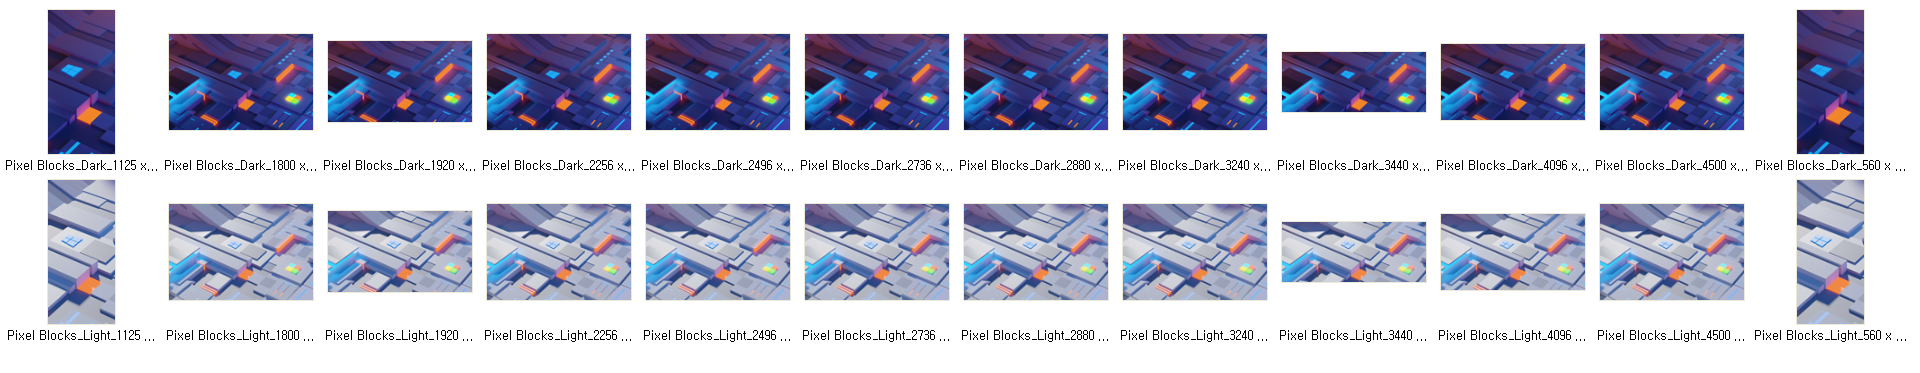 Pixel Blocks(UpRGB)_Preview.png